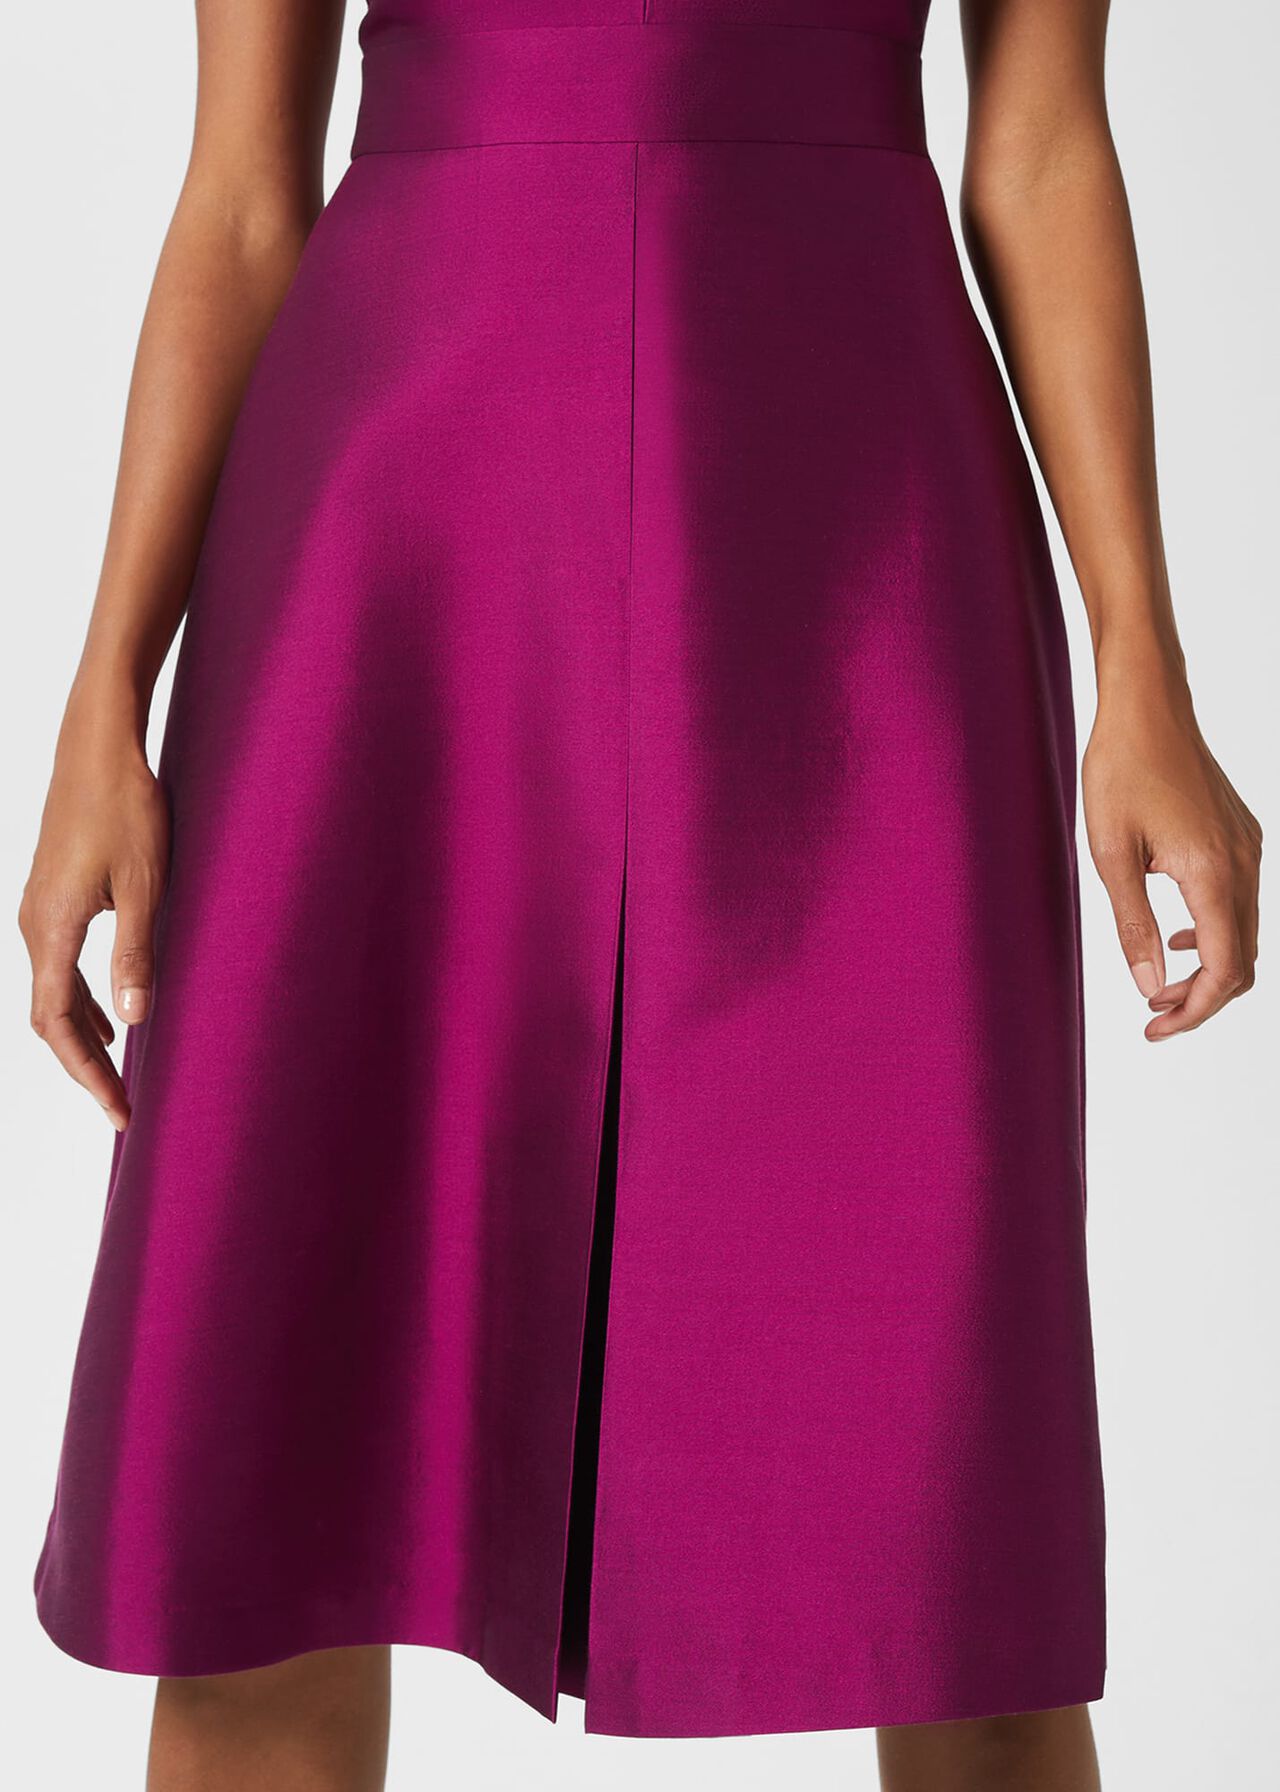 Marcella Silk Blend Beaded Dress, Berry Purple, hi-res